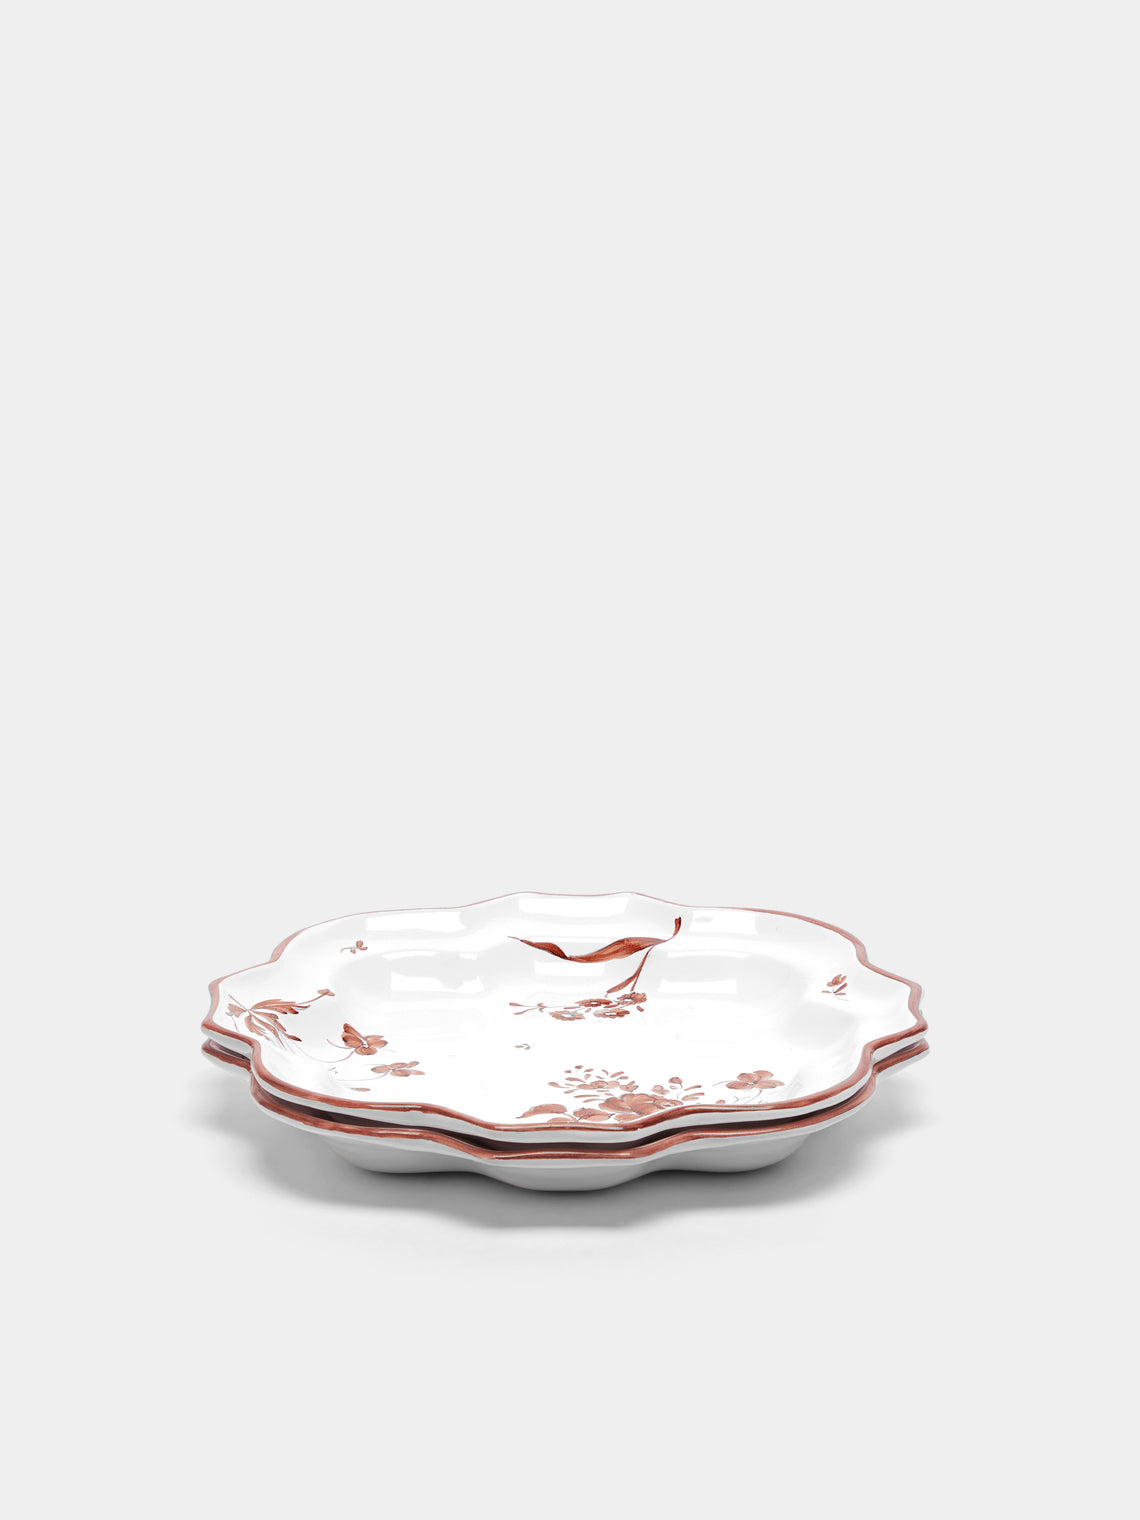 Z.d.G - Camaïeu Drageoir Hand-Painted Ceramic Dessert Plates (Set of 2) - Brown - ABASK